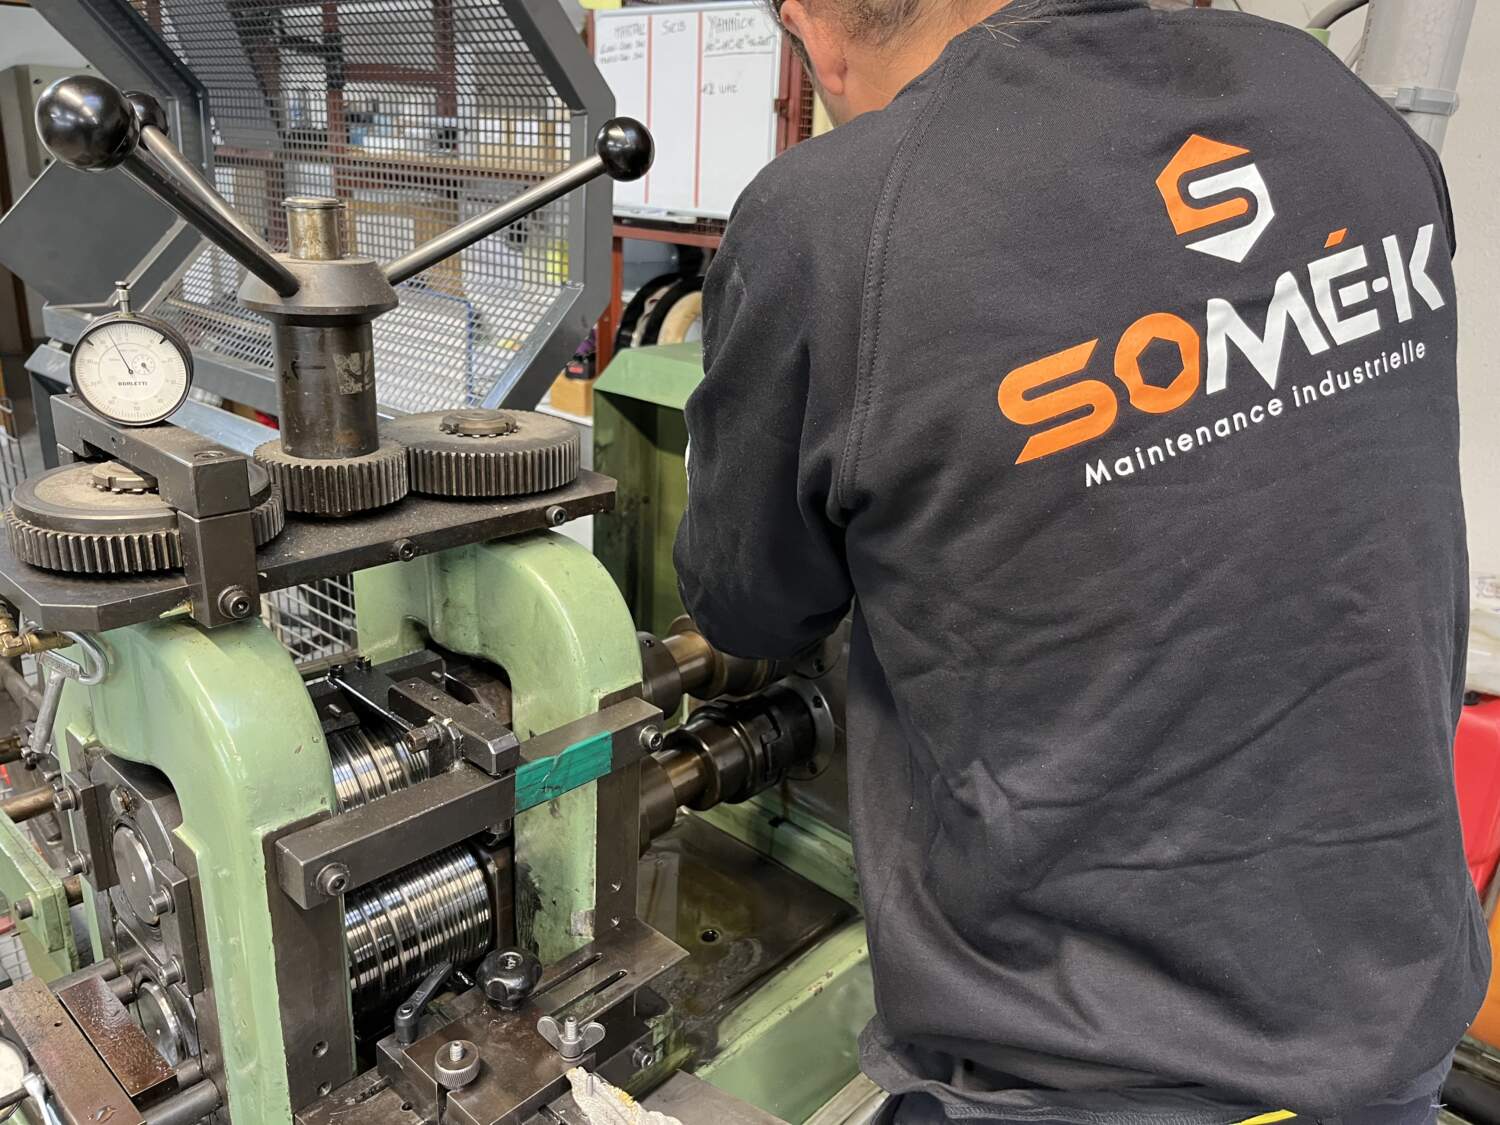 SOMÉ-K maintenance industrielle Rumilly